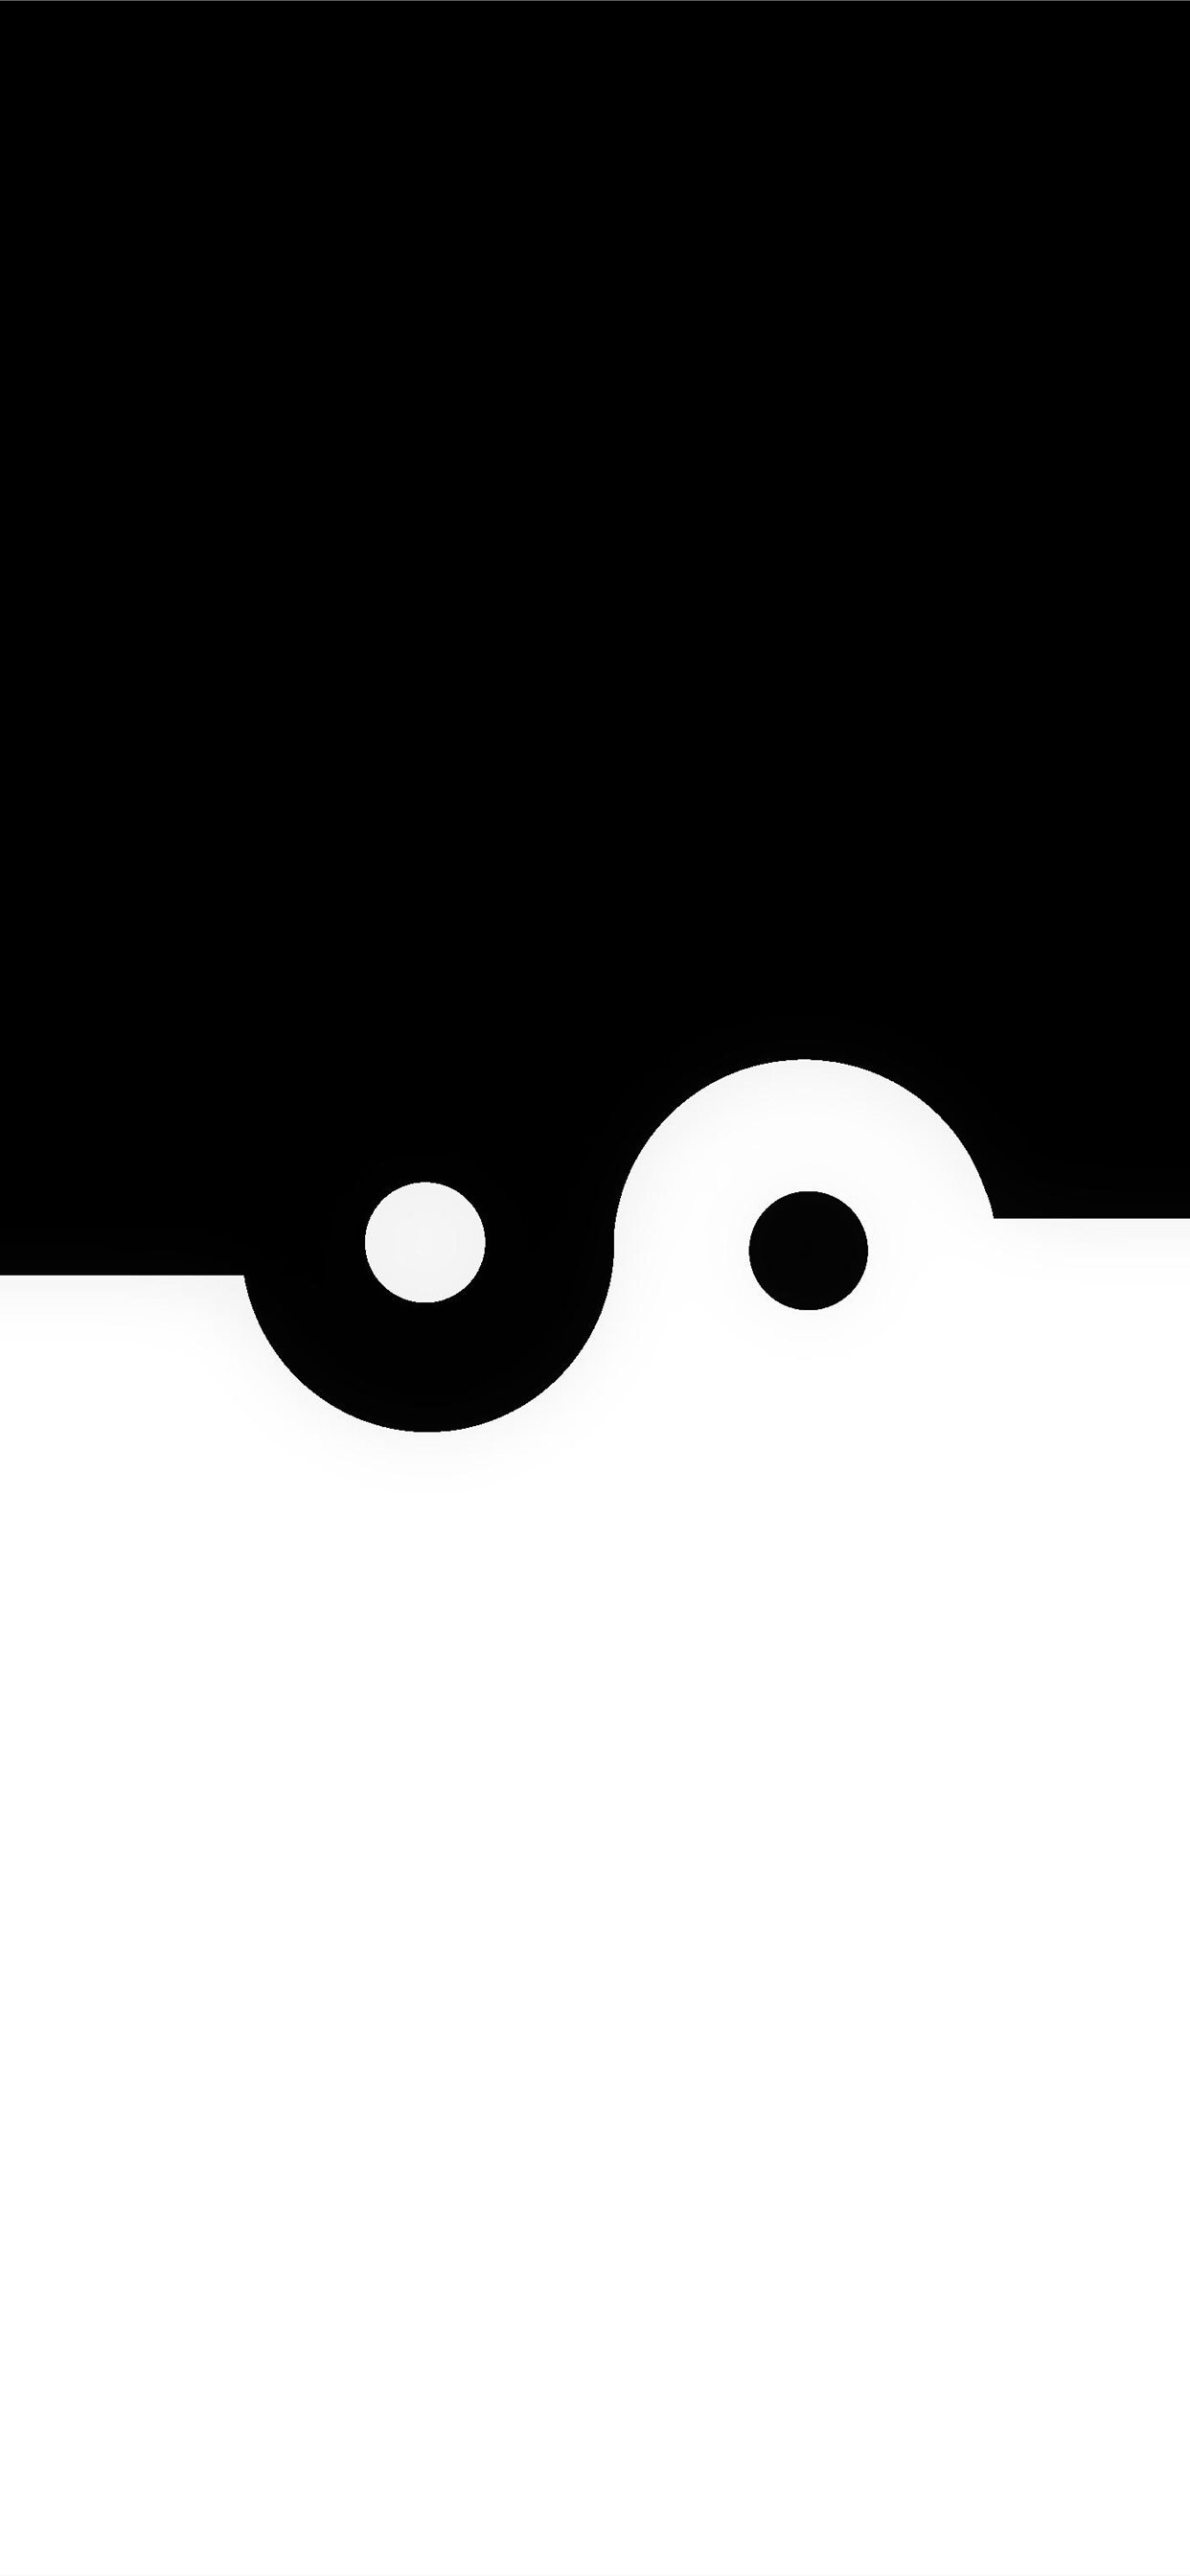 Yin yang minimalist S10 iPhone 11 Wallpaper Free Download